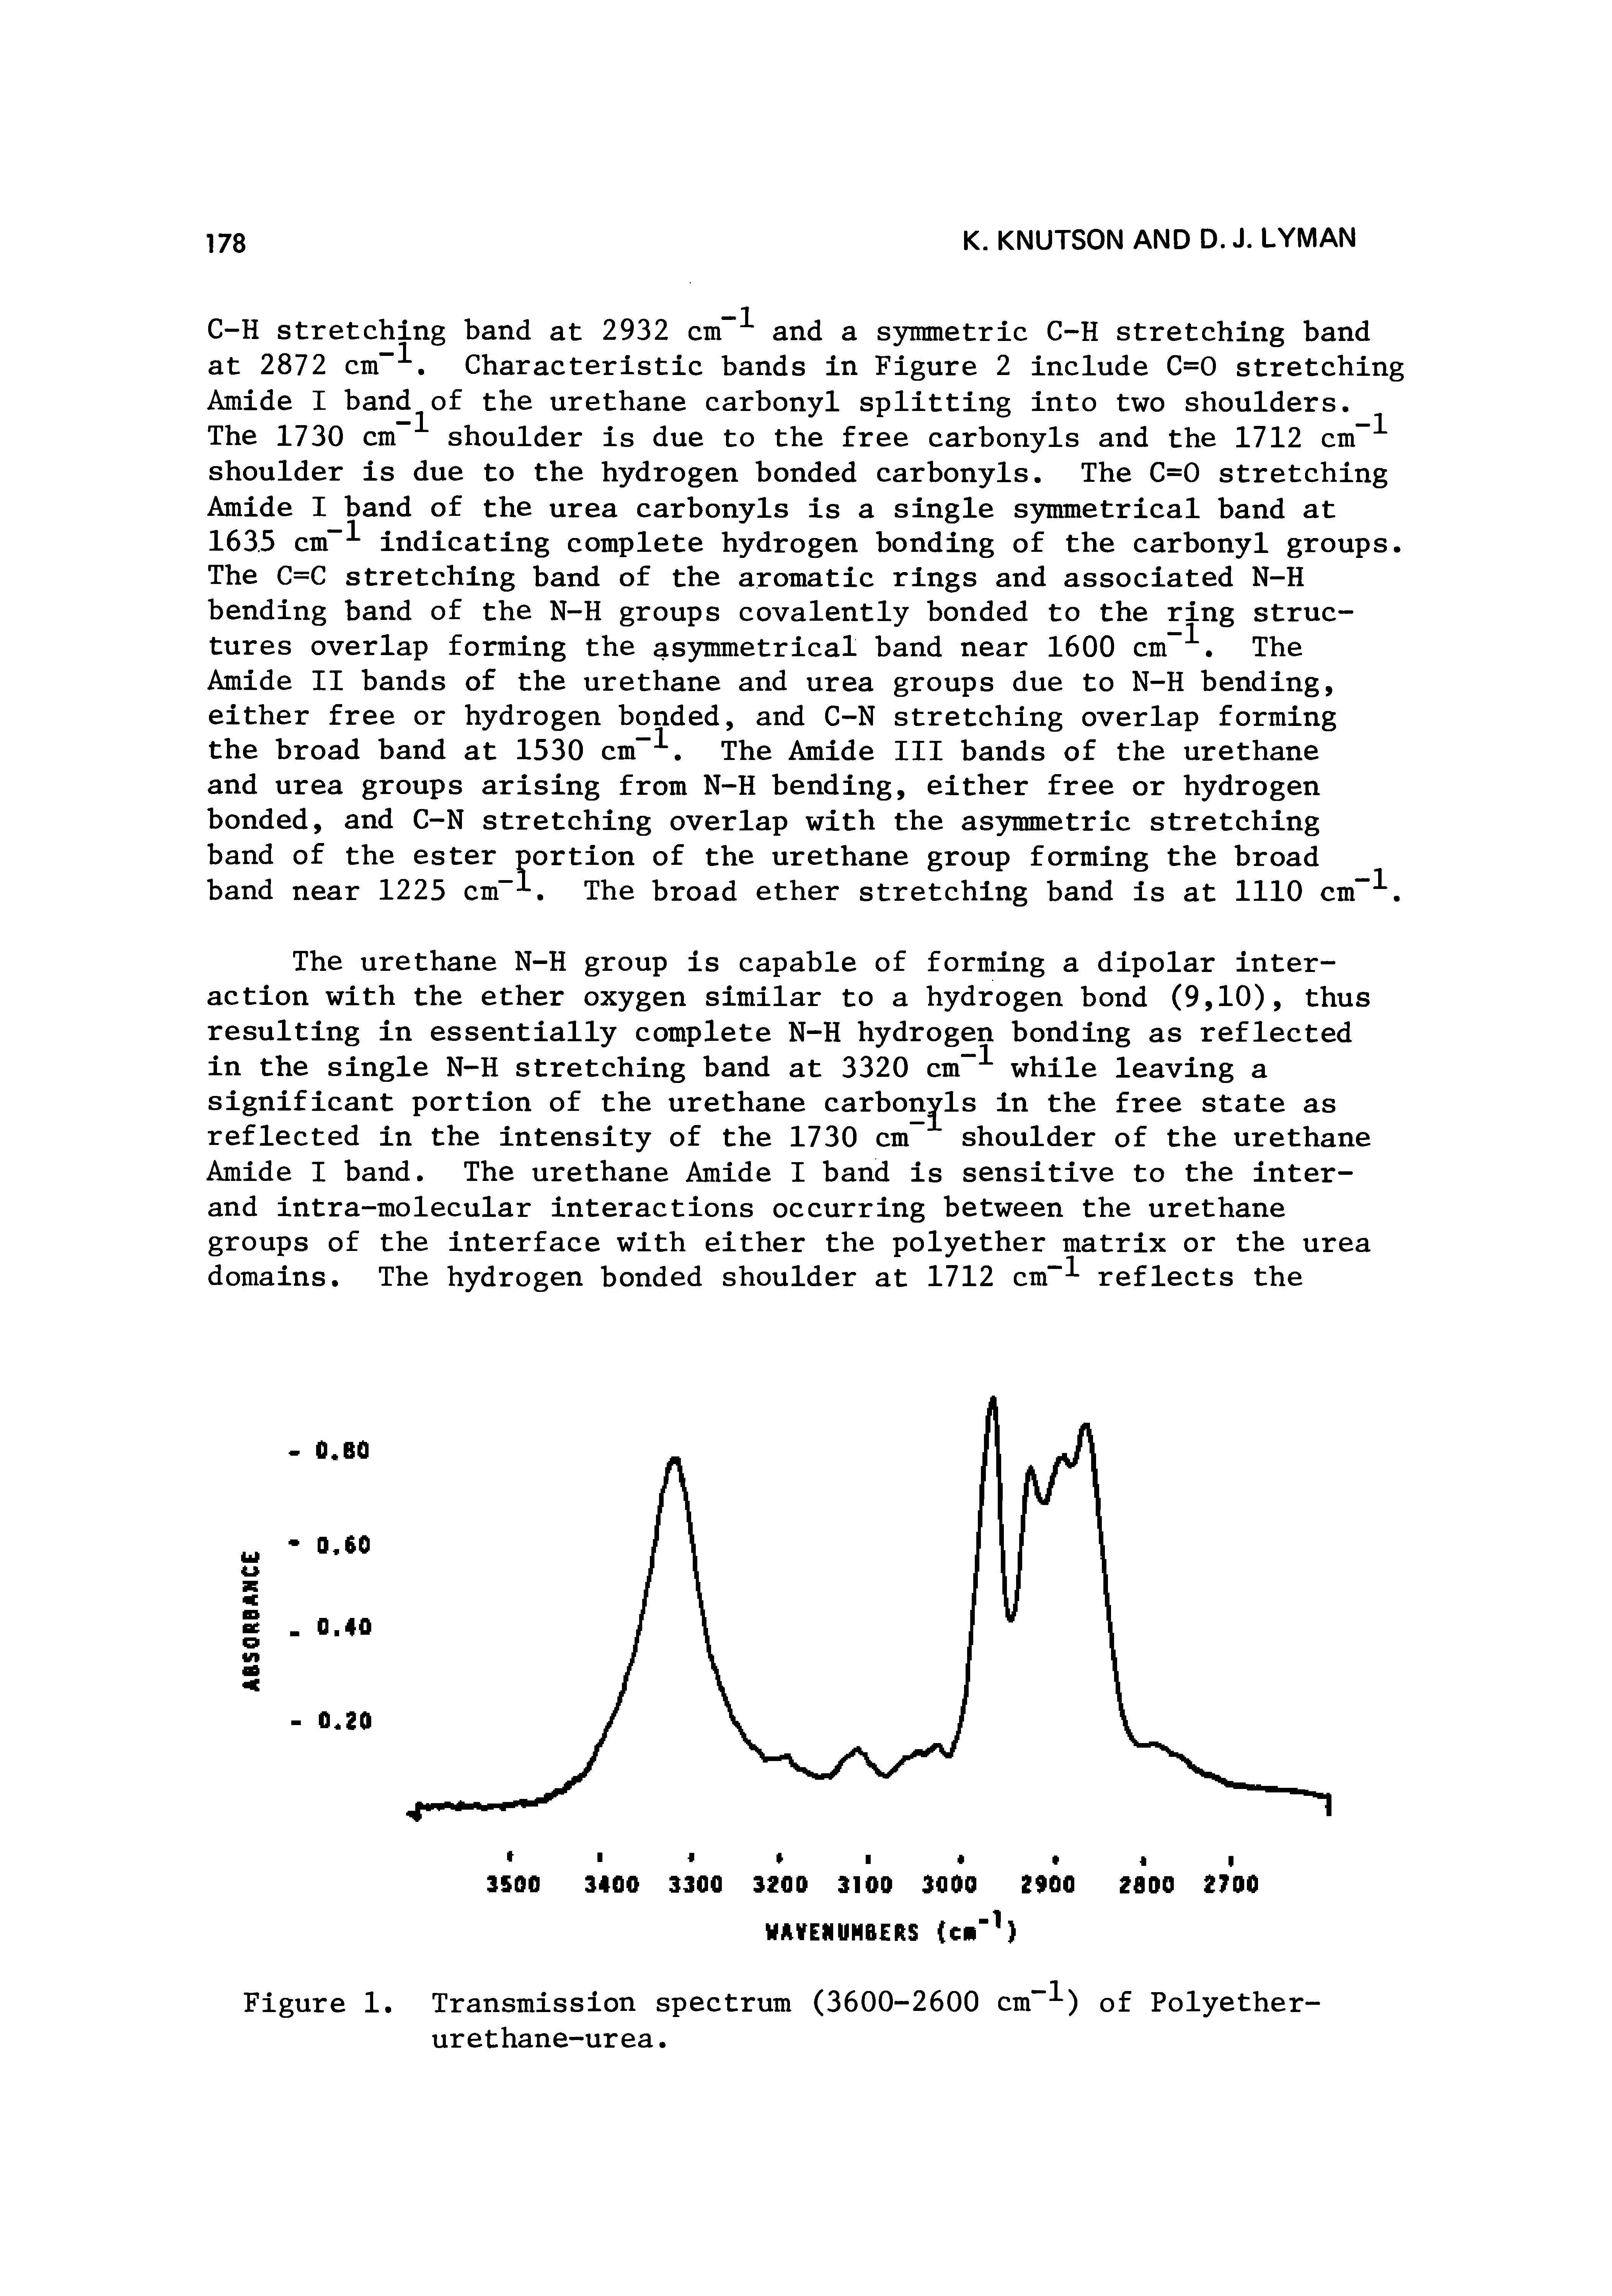 Figure 1. Transmission spectrum (3600-2600 cm" ) of Polyether-urethane-urea.